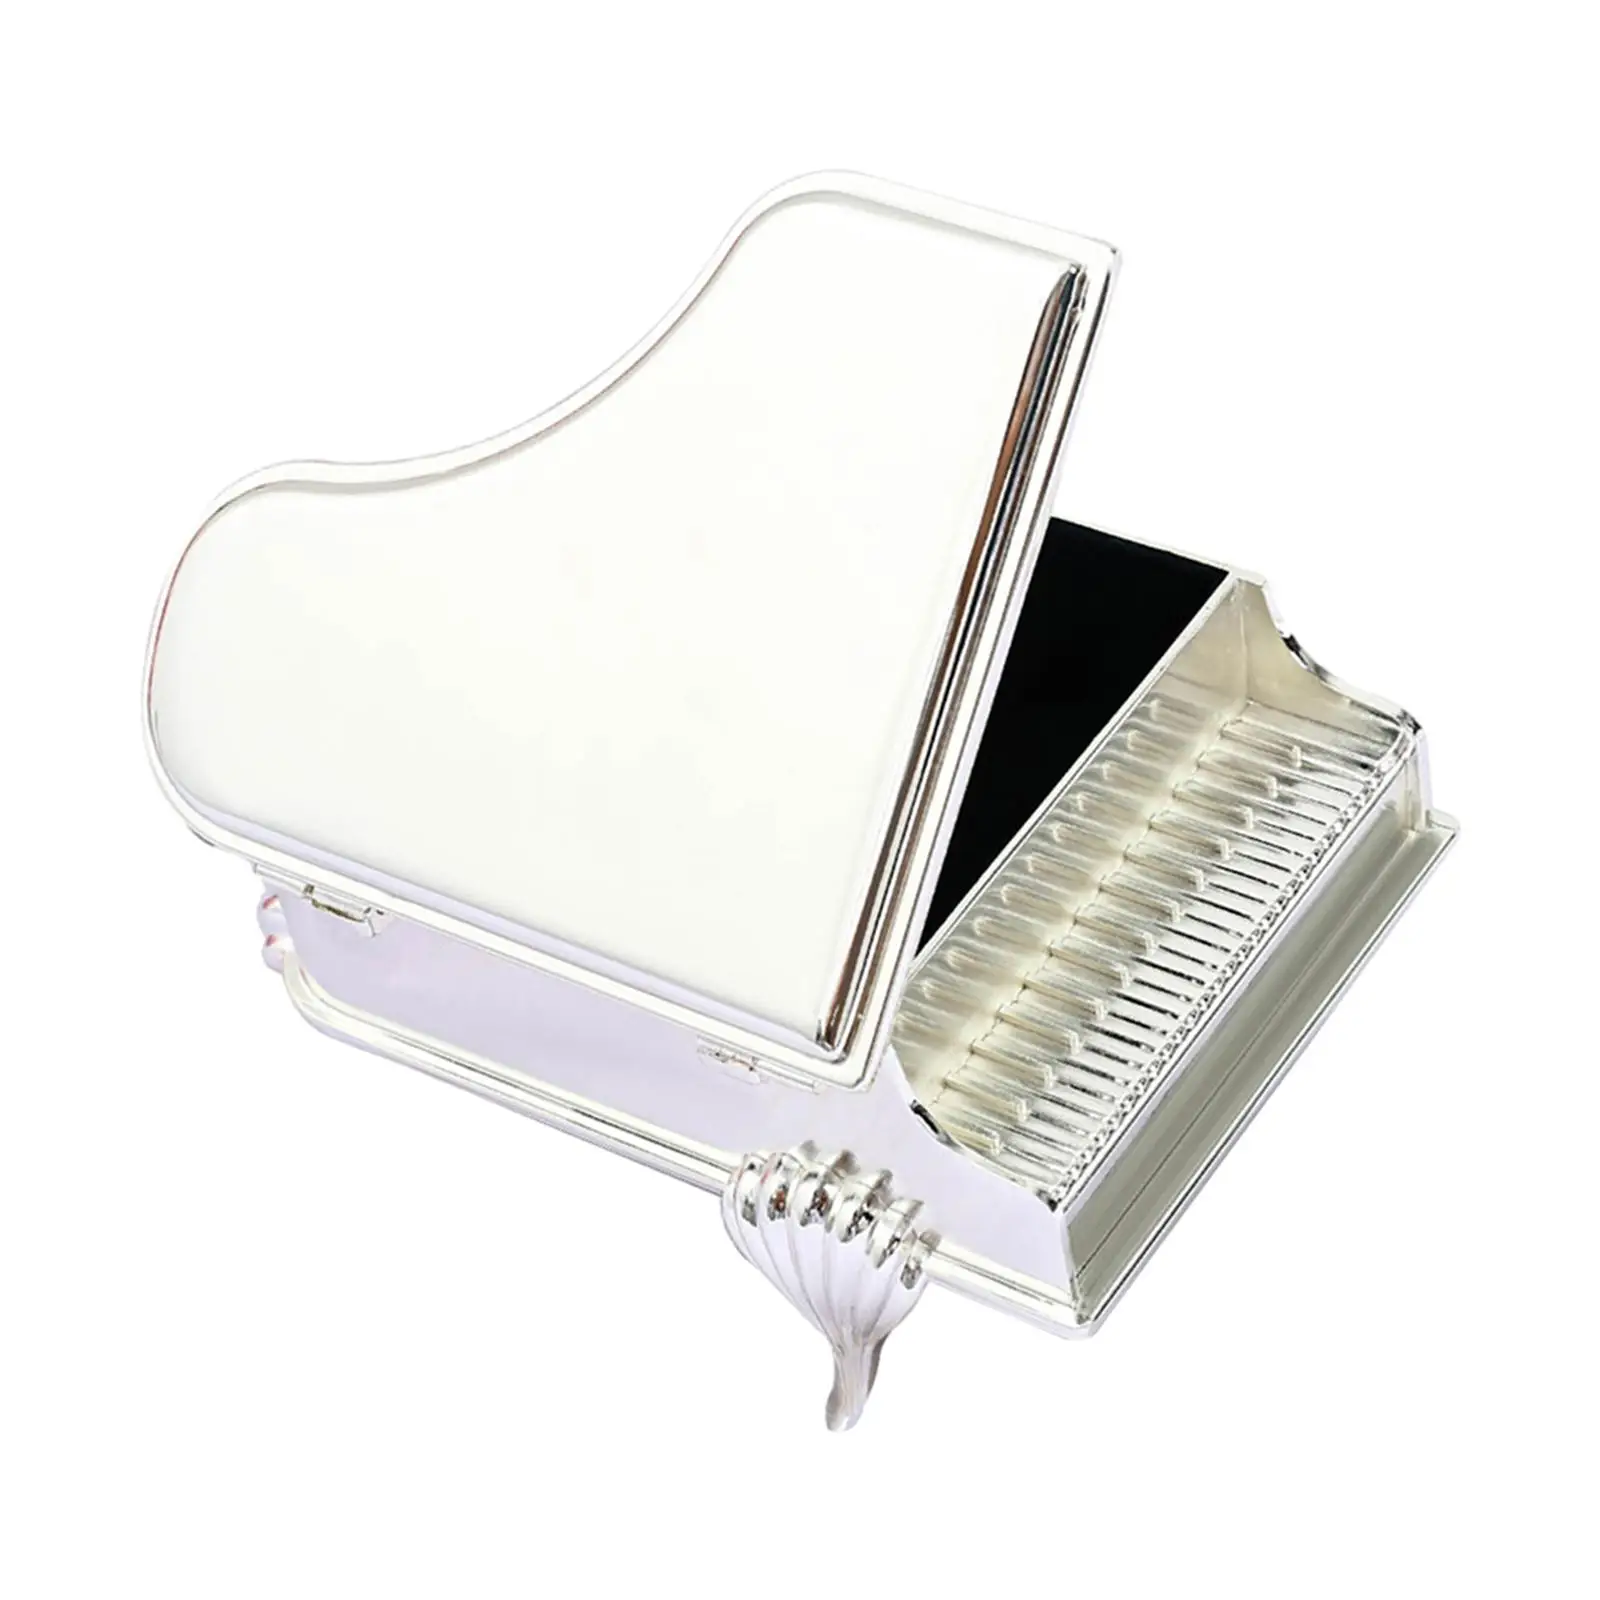 Piano Shape Jewelry Box Exquisite Rings Desktop Decor Display Case Storage Box for Wedding Brithday Gift Engagement Girls Women